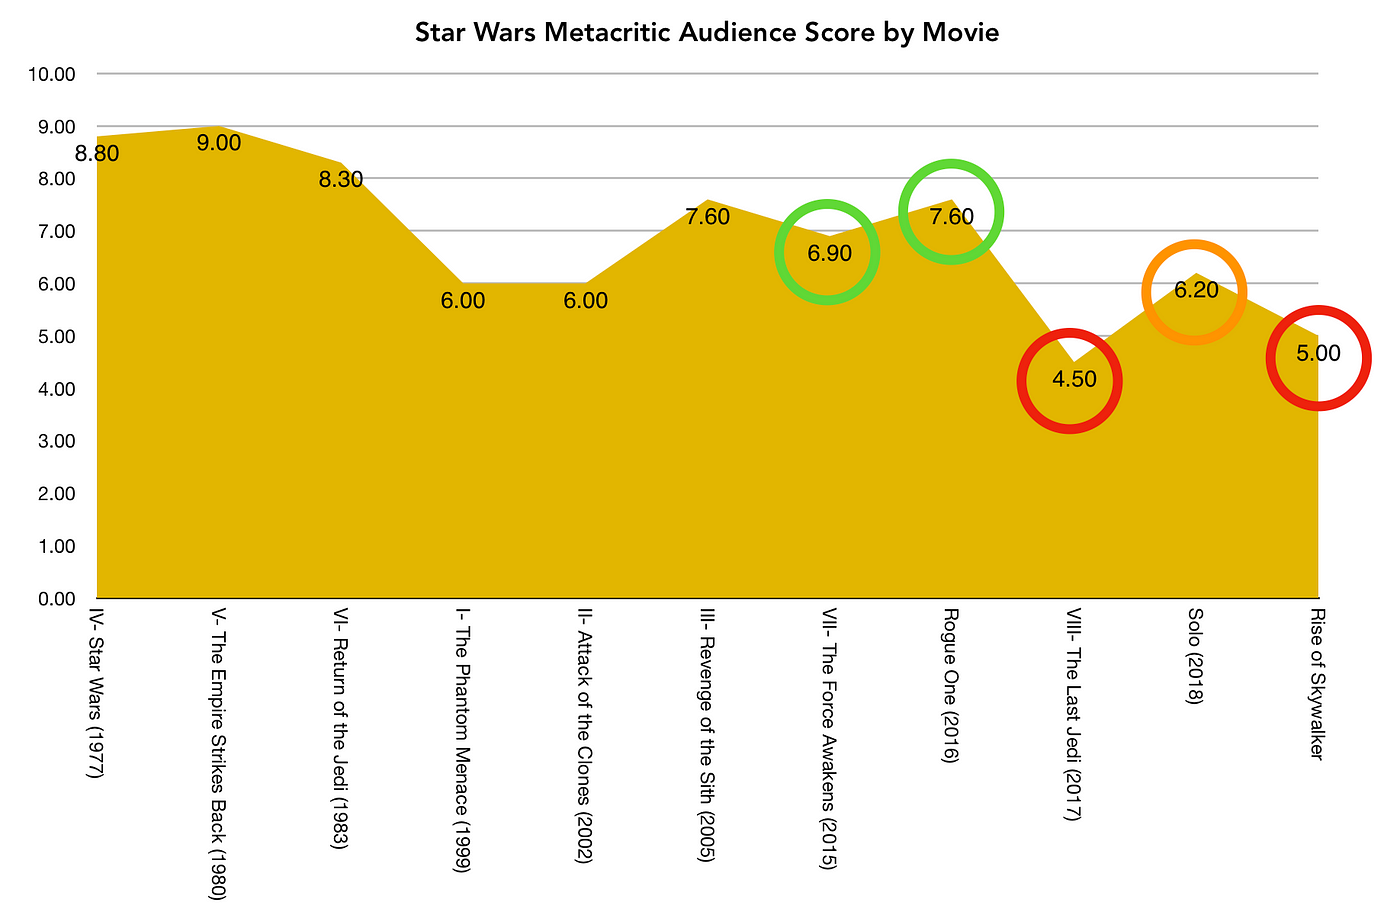 Last Jedi' scores high in Star Wars film ranking